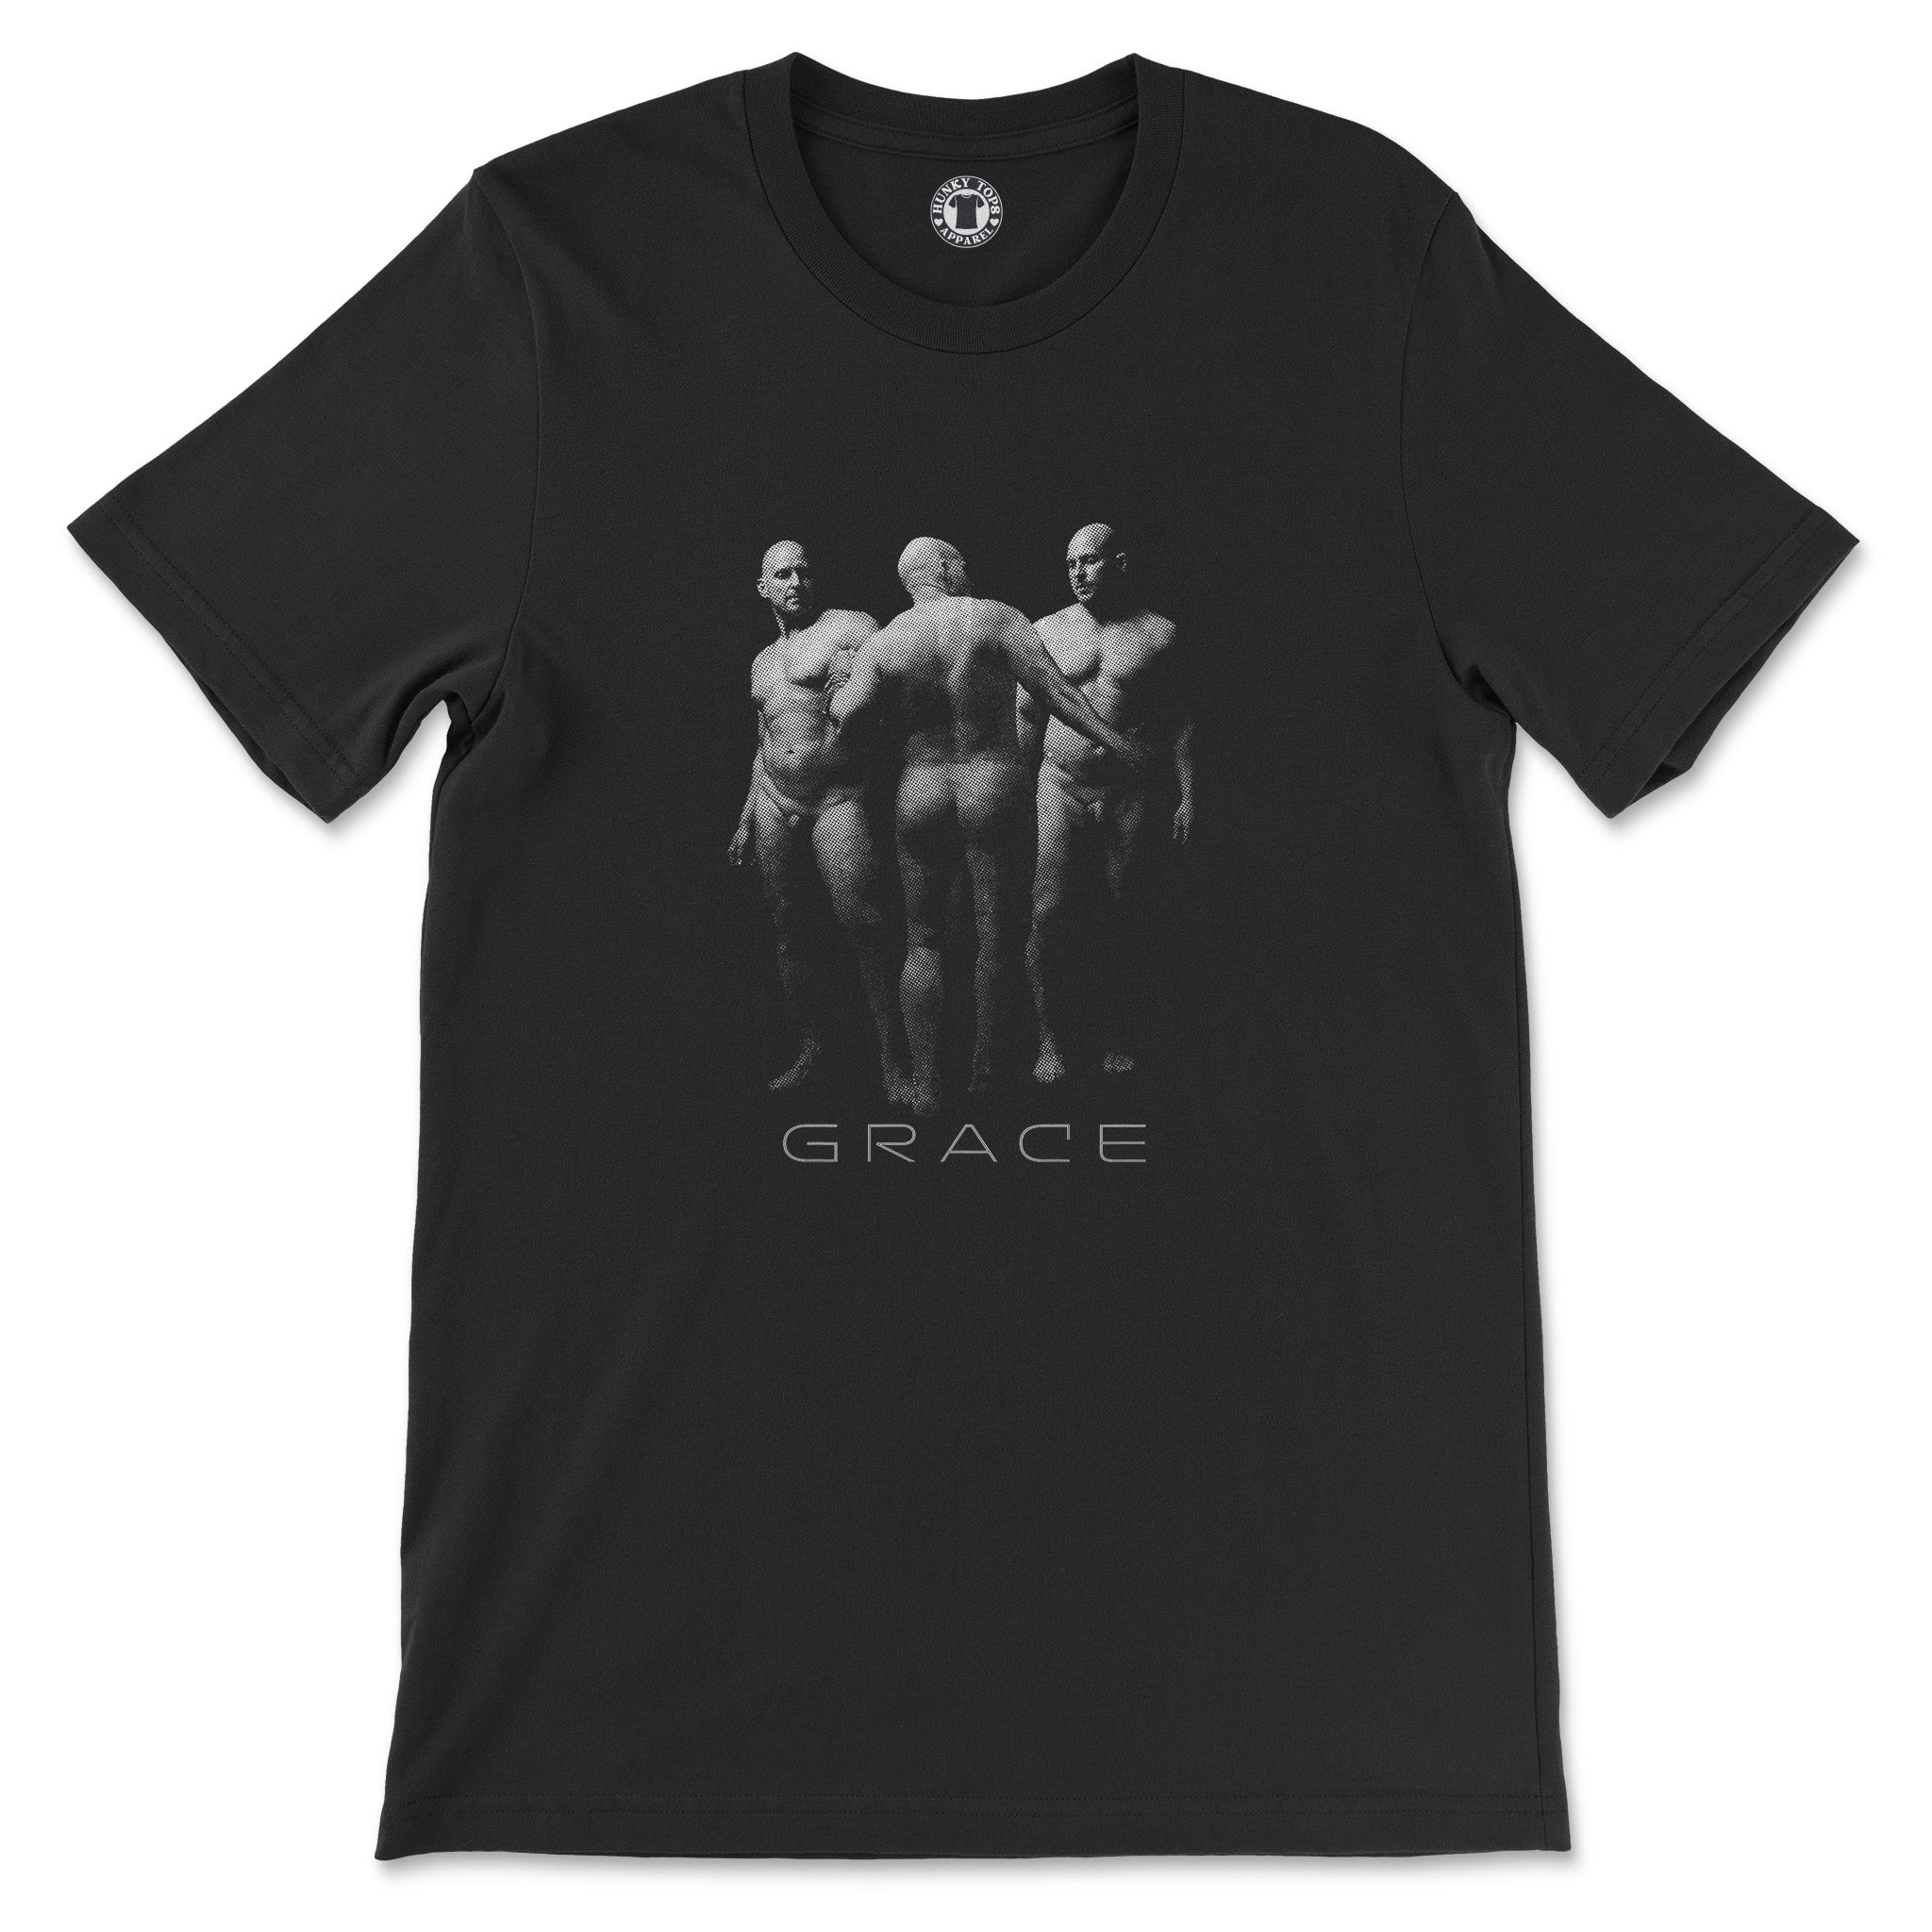 "GRACE" Monochrome Masterpiece T-Shirt - Hunky Tops